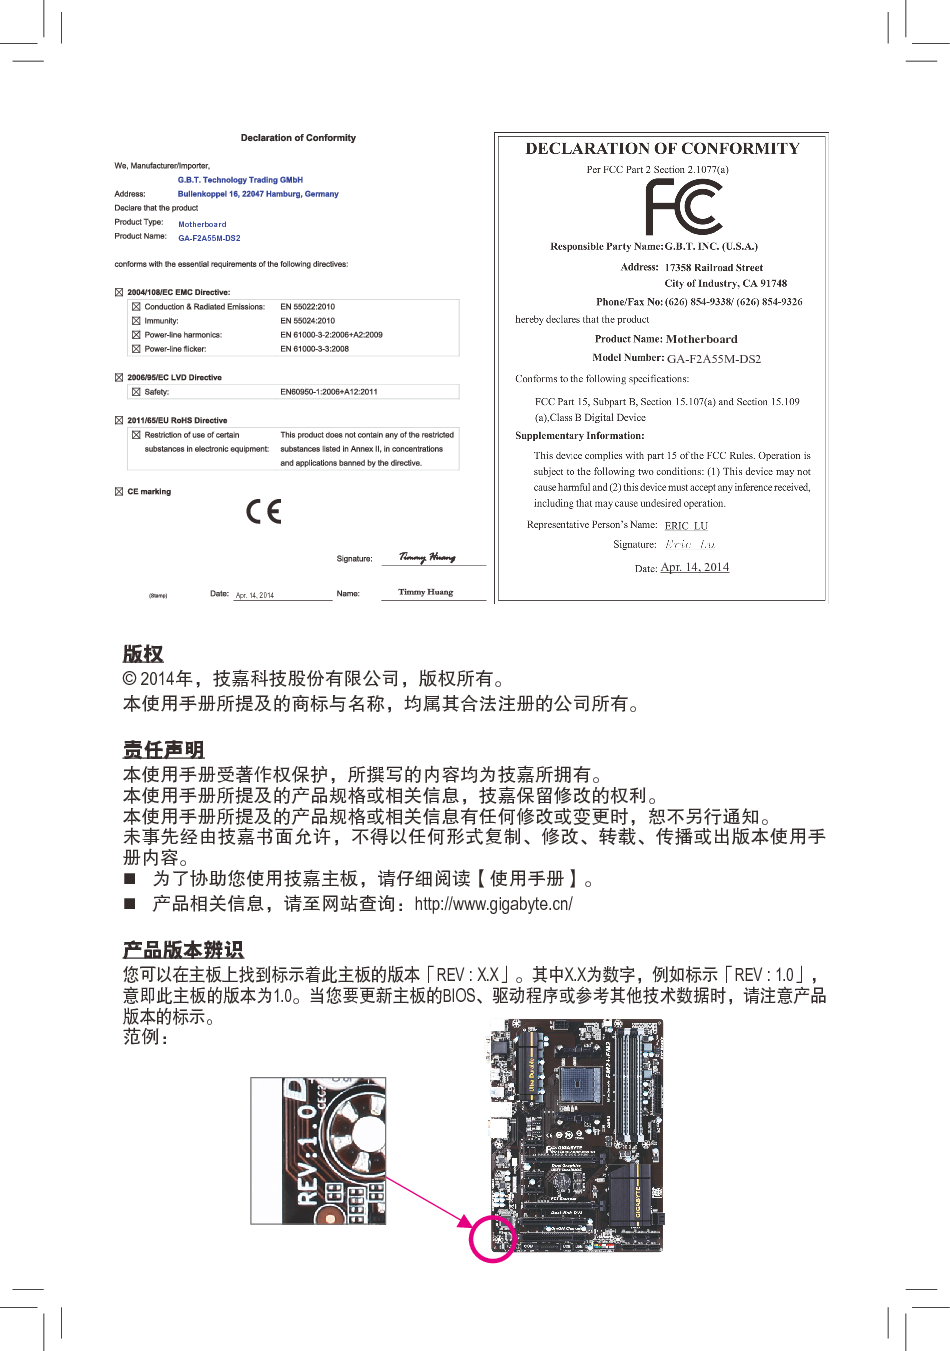 技嘉 Gigabyte GA-F2A55M-DS2 使用说明书 第1页